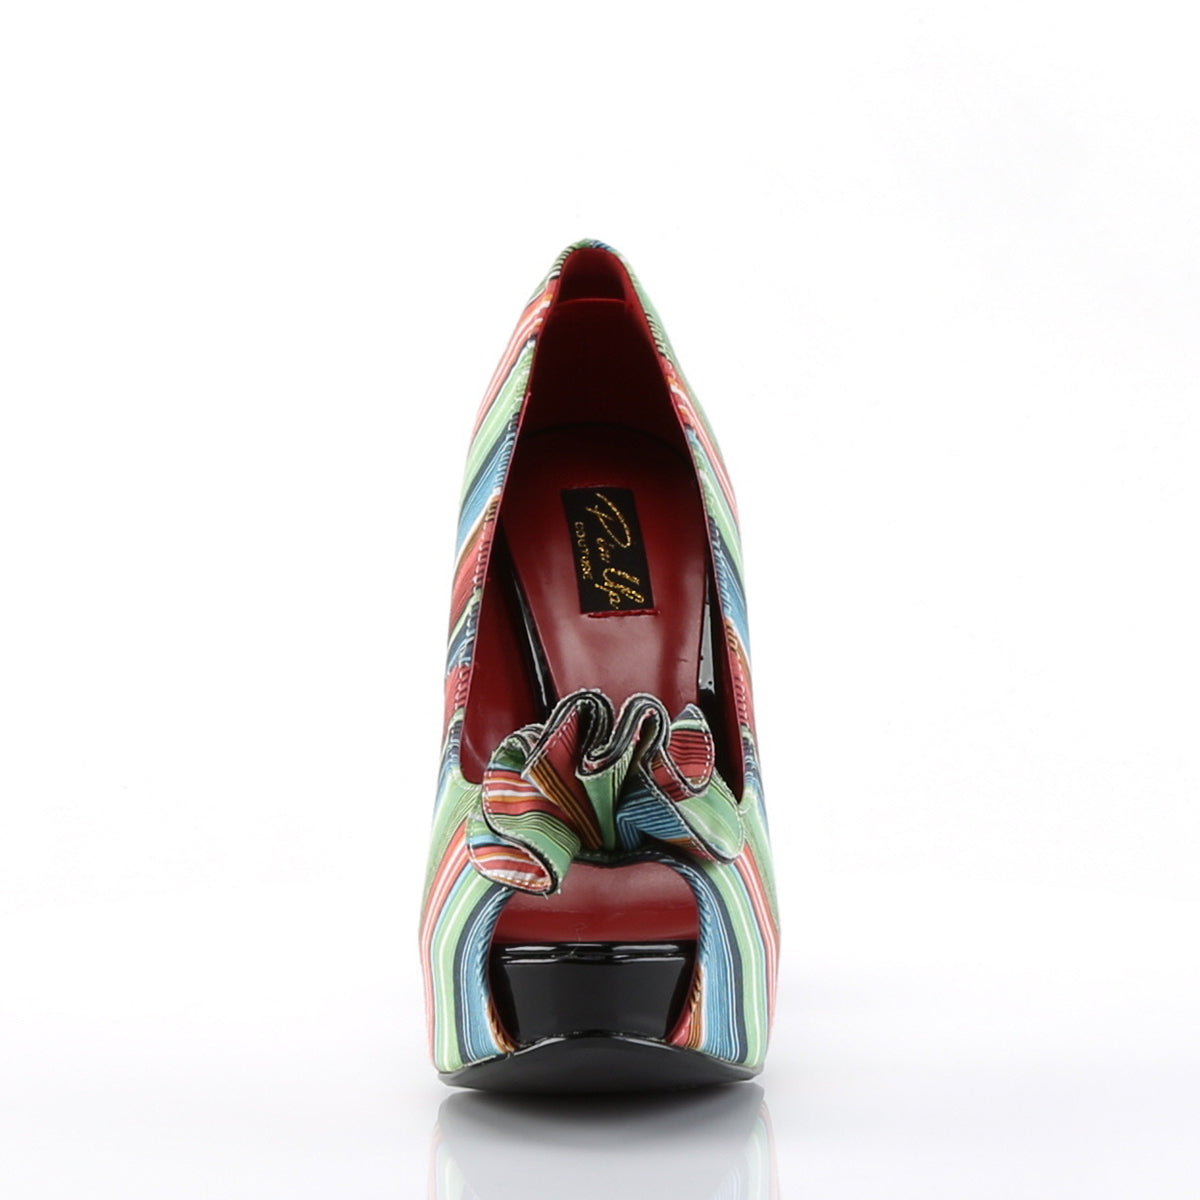 LOLITA-12 Pin Up Couture Serape Print Fabric Platforms [Retro Glamour Shoes]